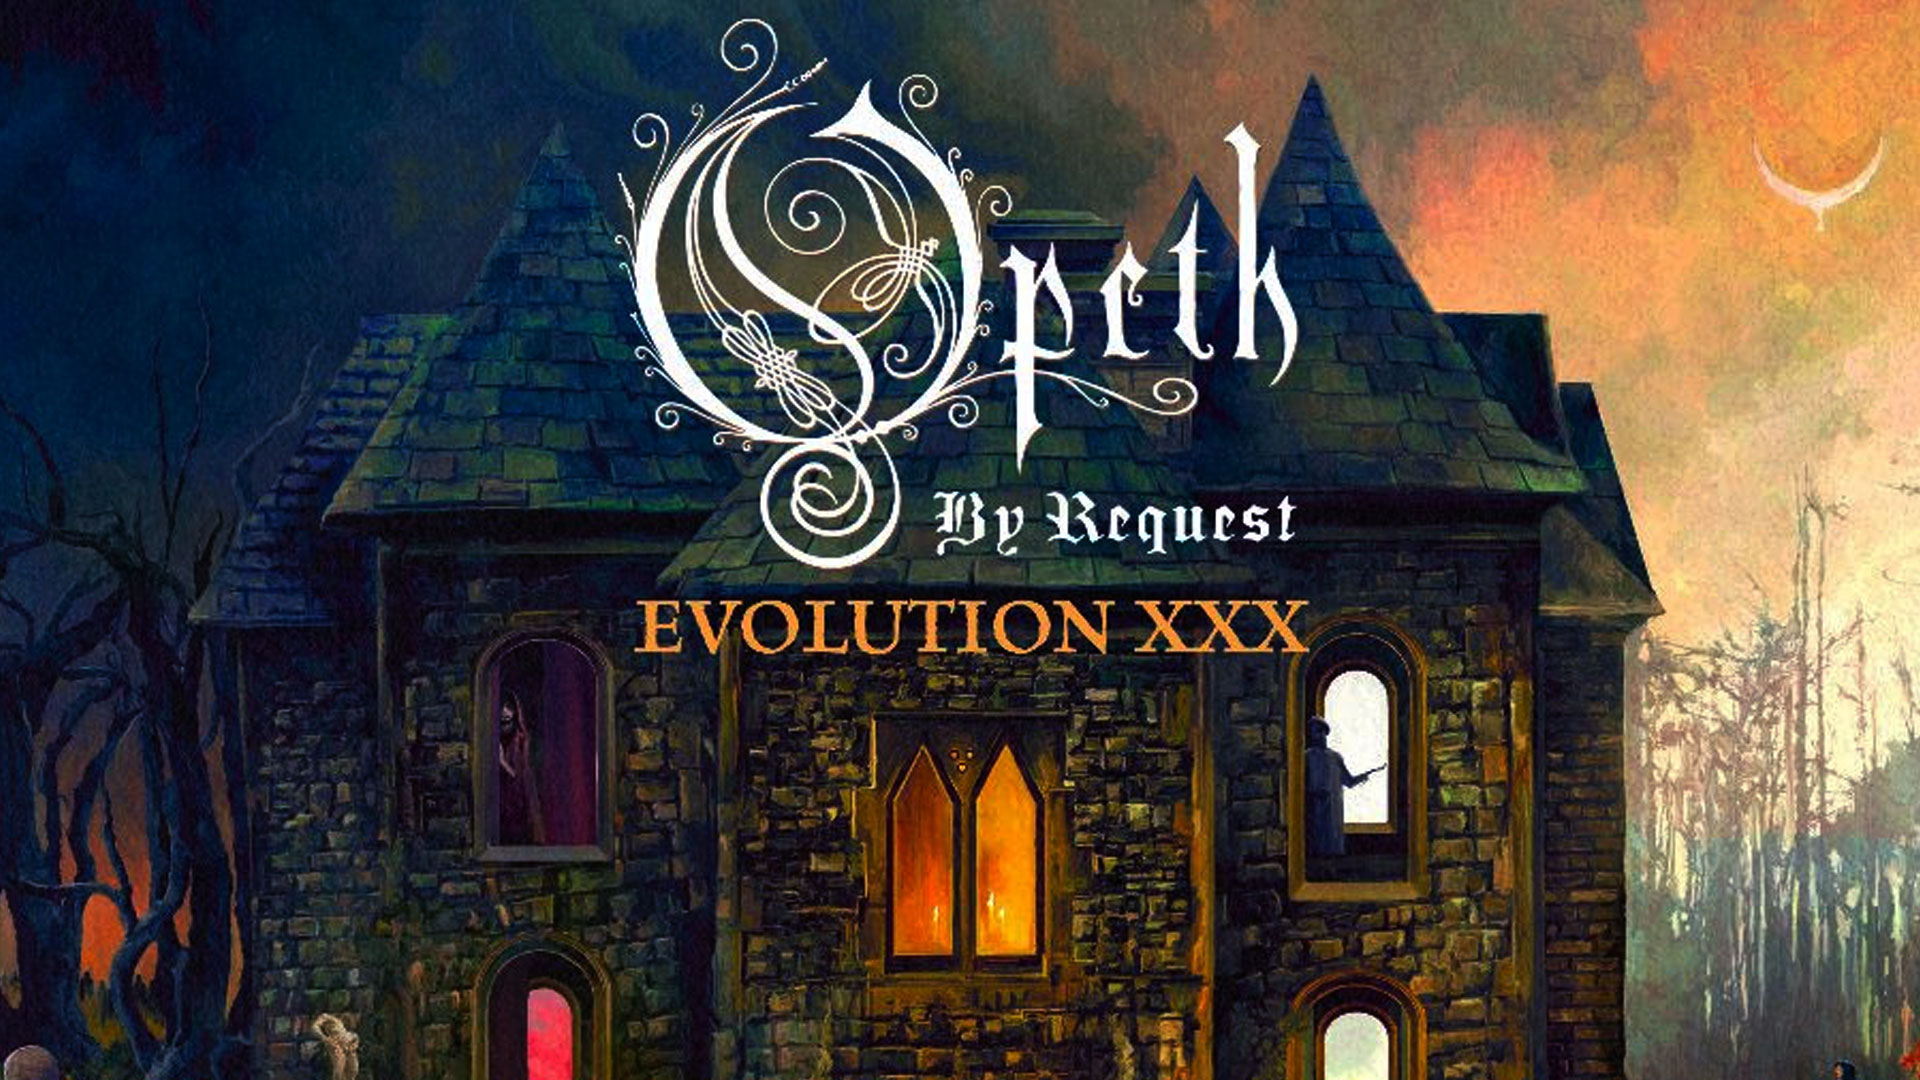 OPETH announced Evolution XXX 'By Request' tour Headbangers.gr